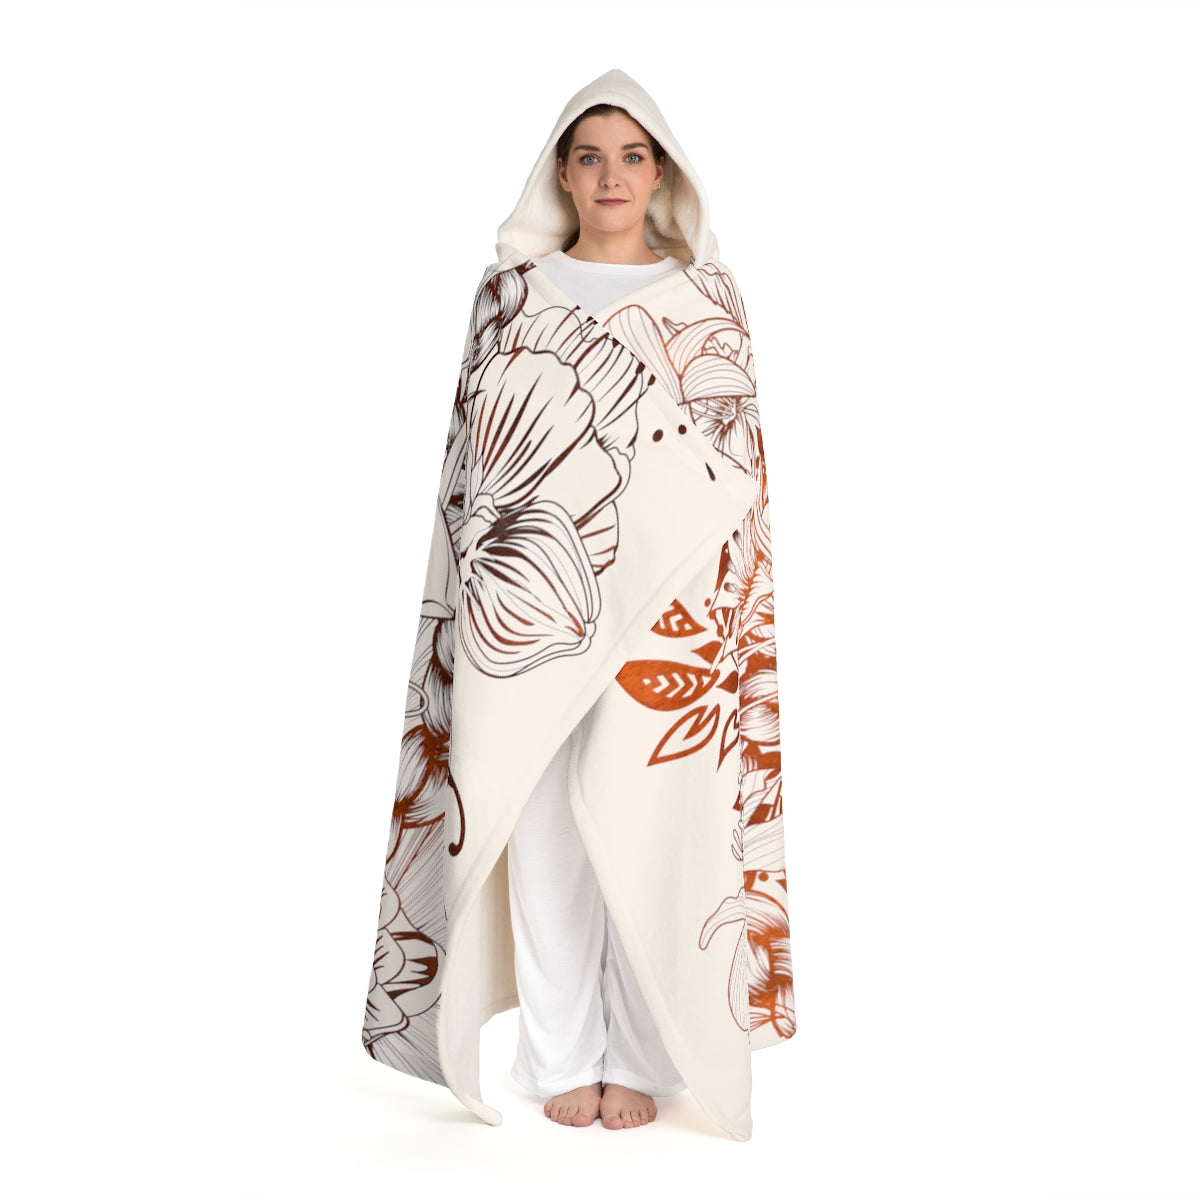 Hooded Blanket - Queen of Joy (white)